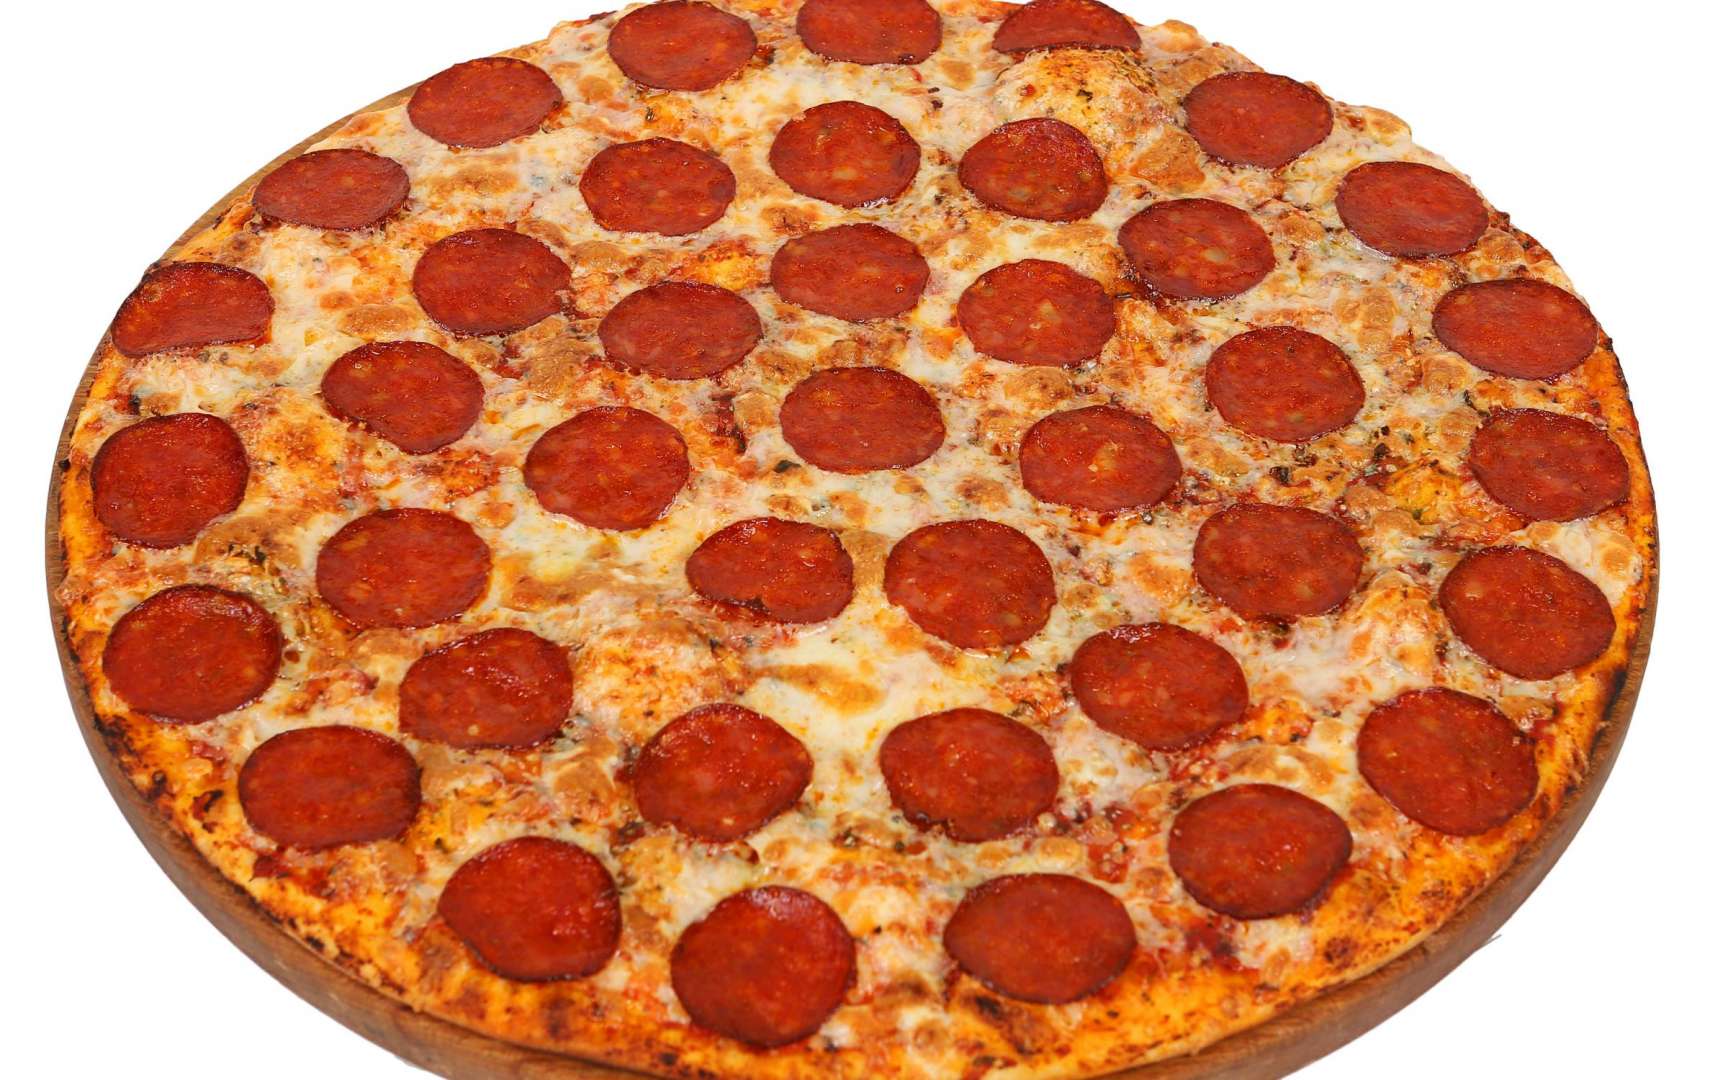 сколько стоит пицца пепперони в москве фото 41